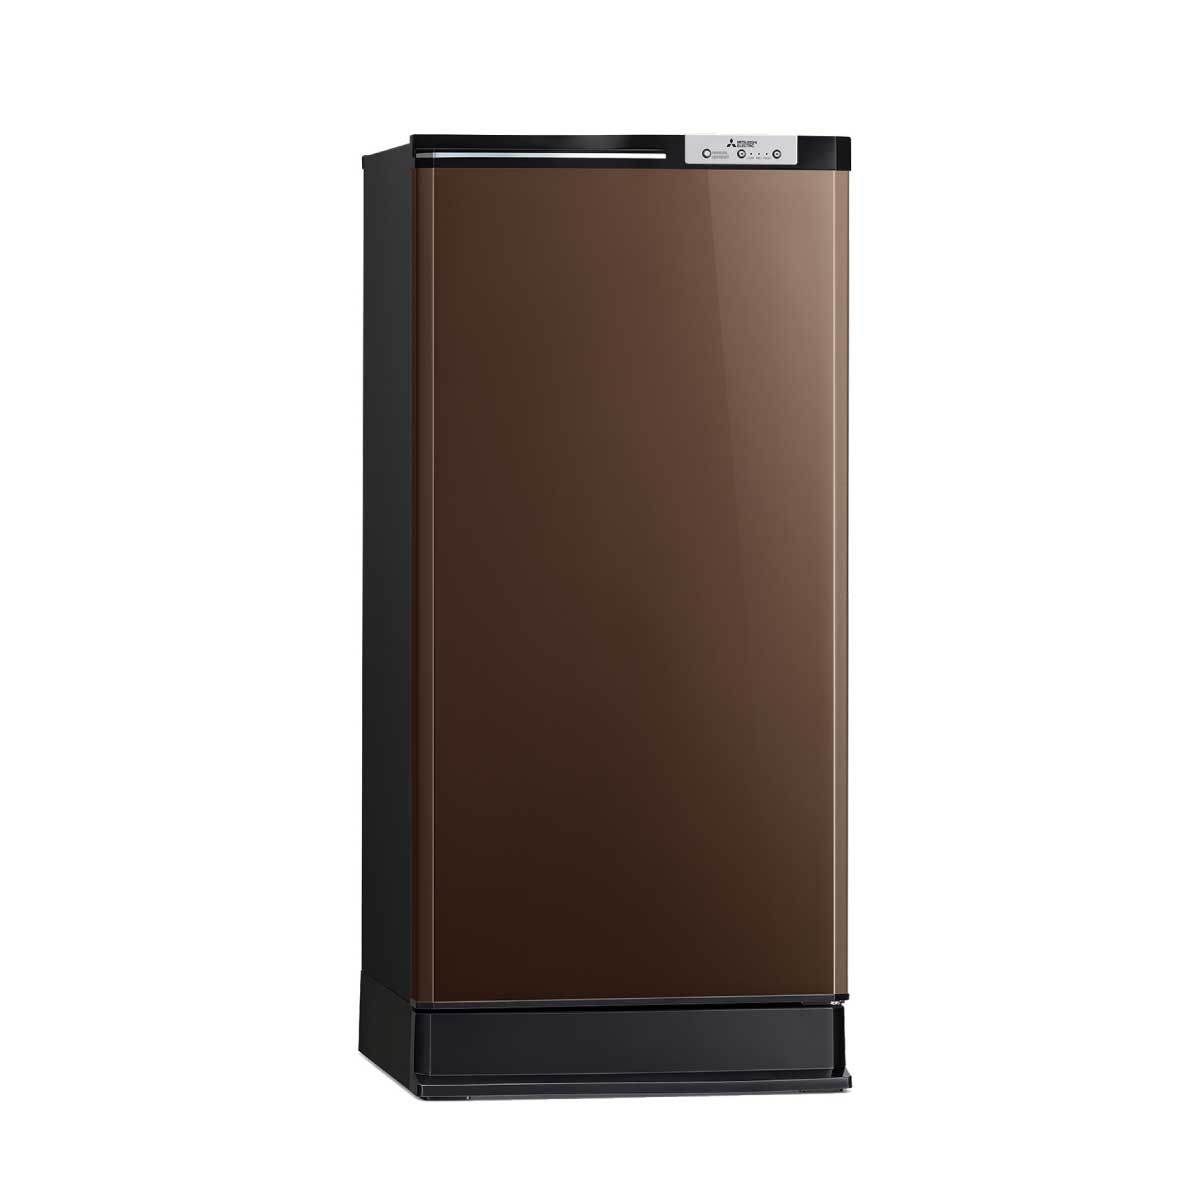 MITSUBISHI ELECTRIC ตู้เย็น1ประตูJ-SMART DEFROST 6.1Q สีน้ำตาล รุ่น MR-18TJA/BR